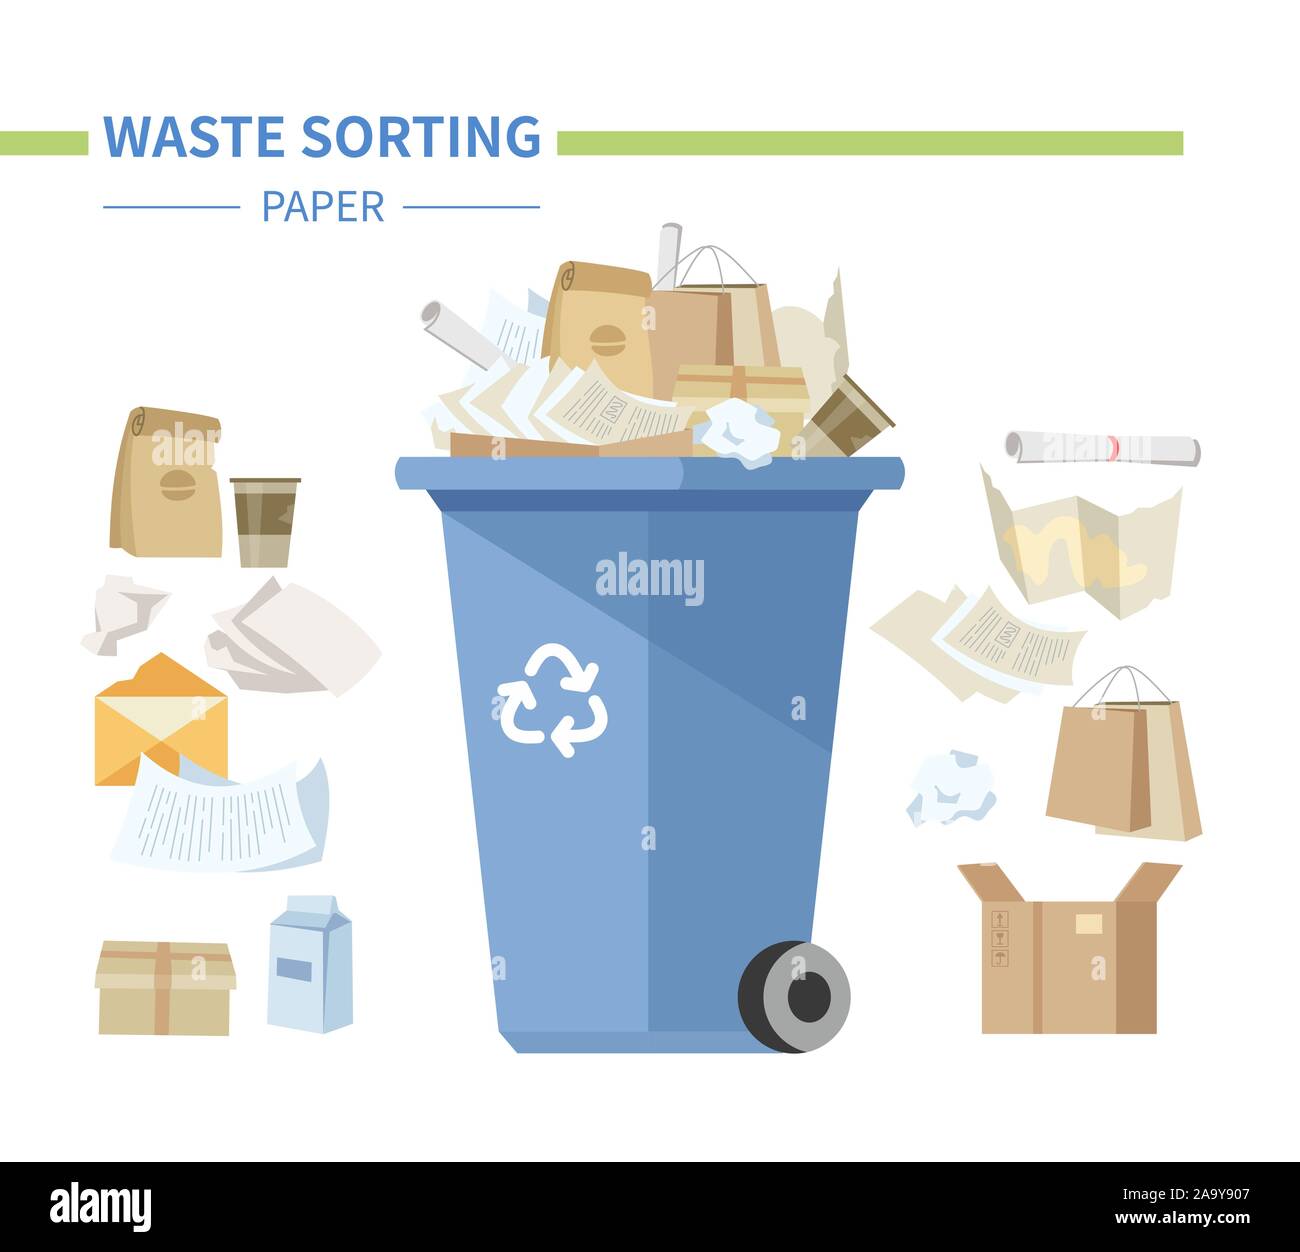 Paper waste sorting - modern flat design style illustration Stock Vector